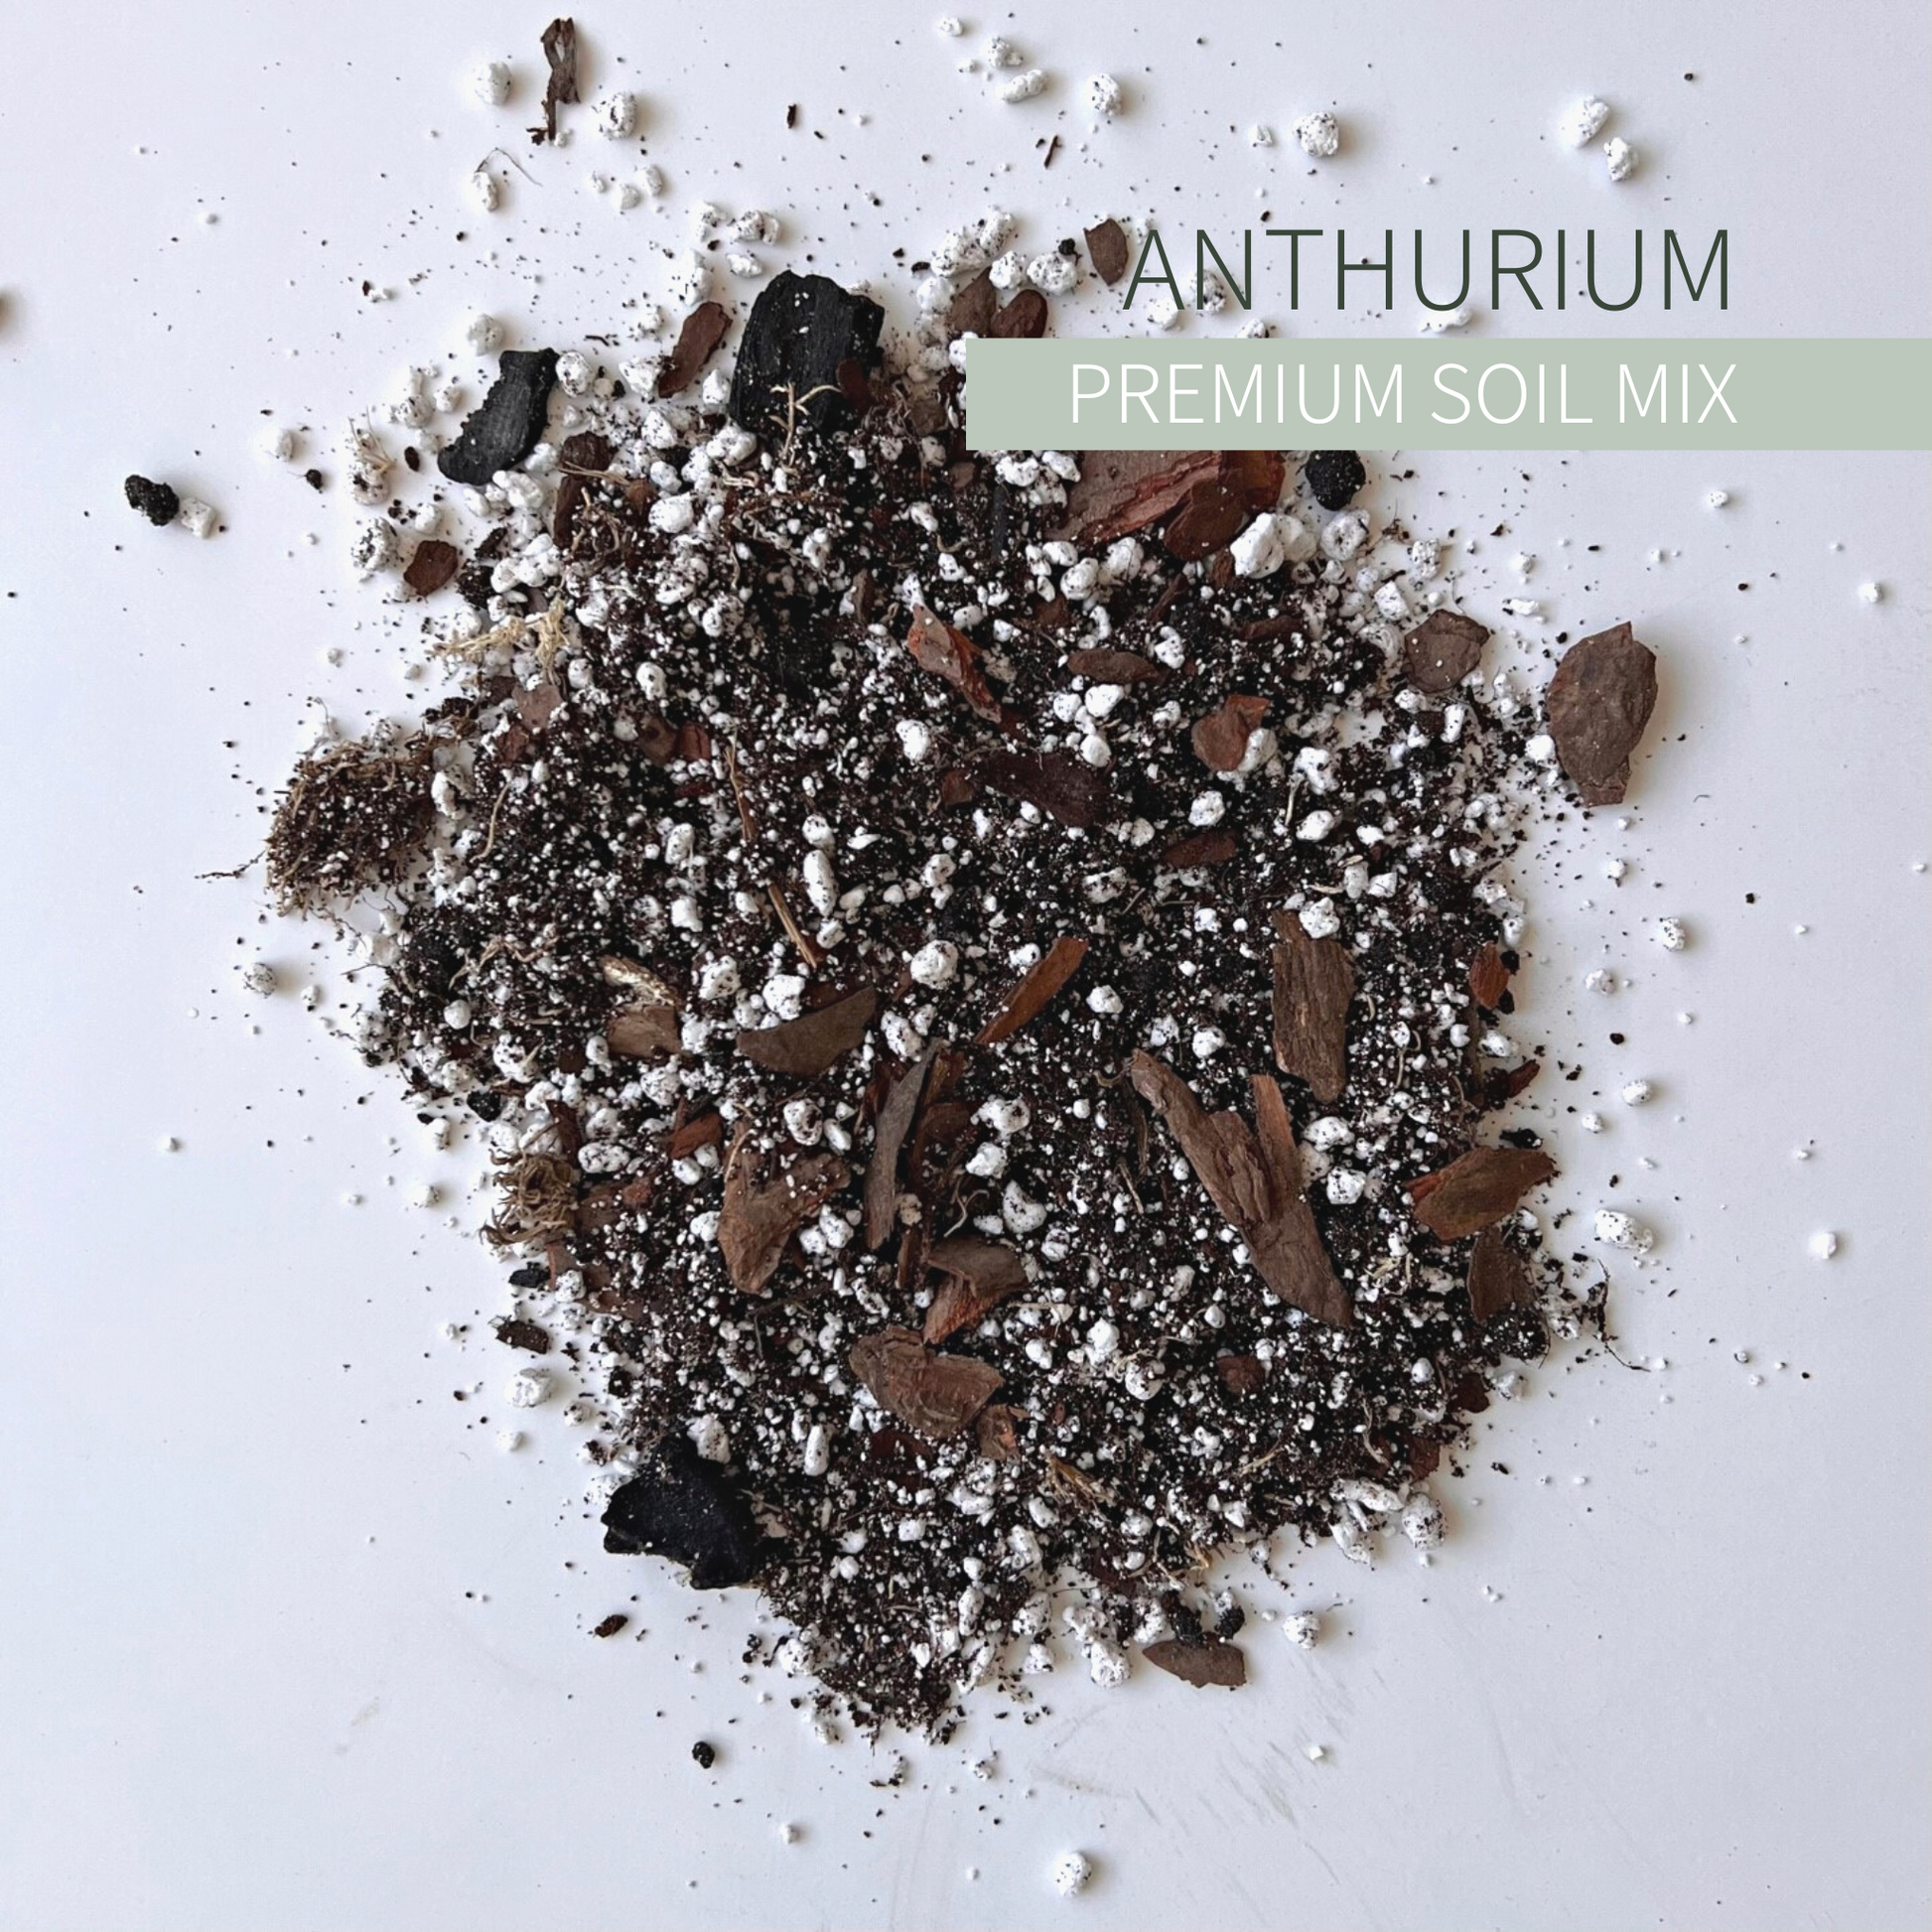 Premium Terrarium Soil Mix – BIRDY'S PLANTS